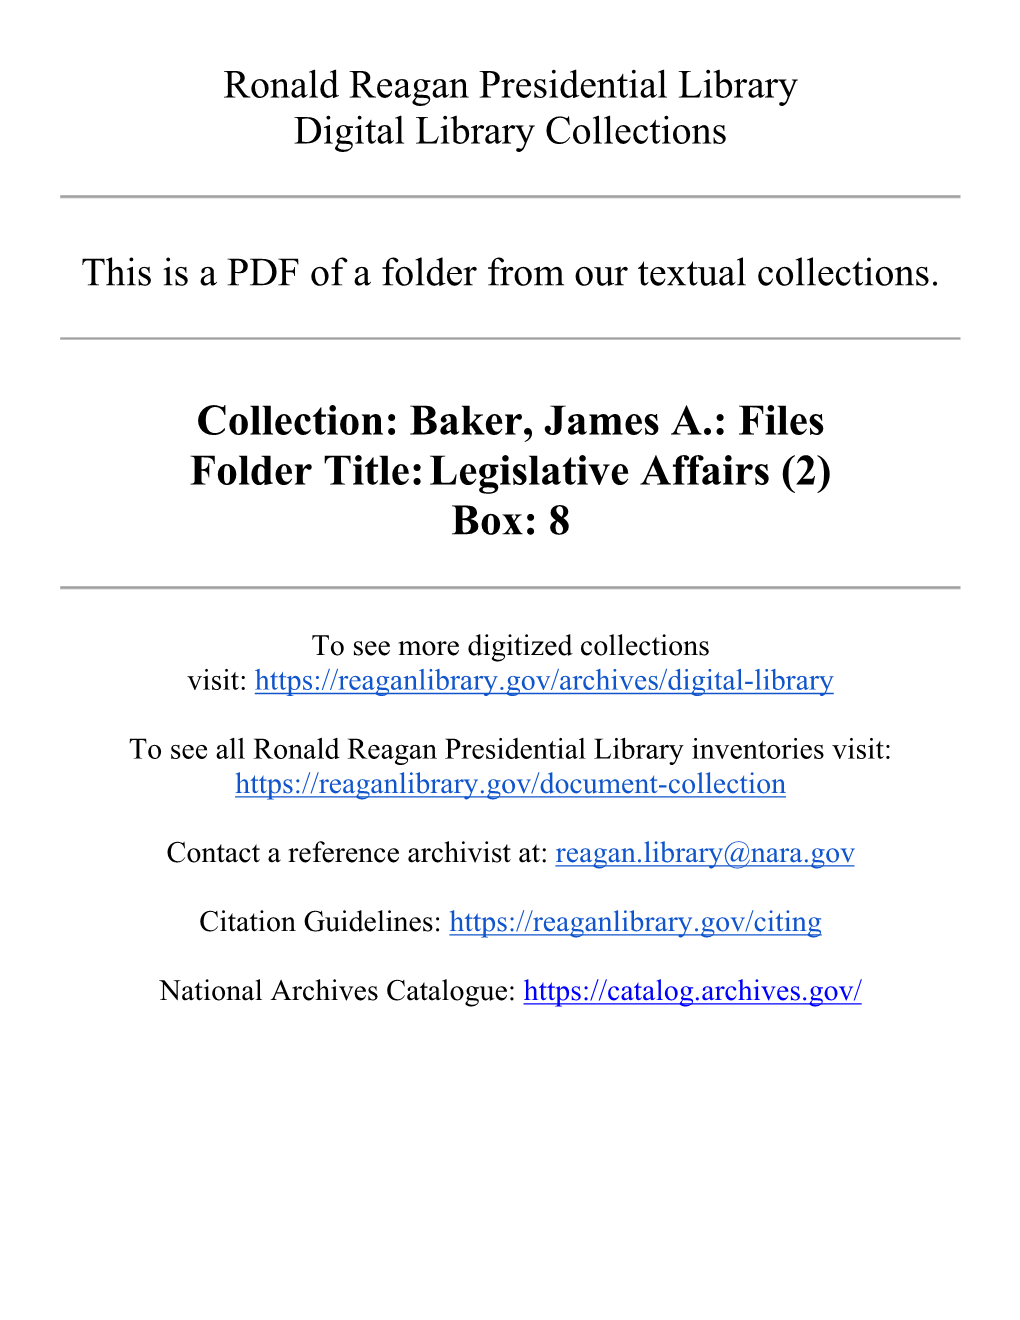 Baker, James A.: Files Folder Title: Legislative Affairs (2) Box: 8